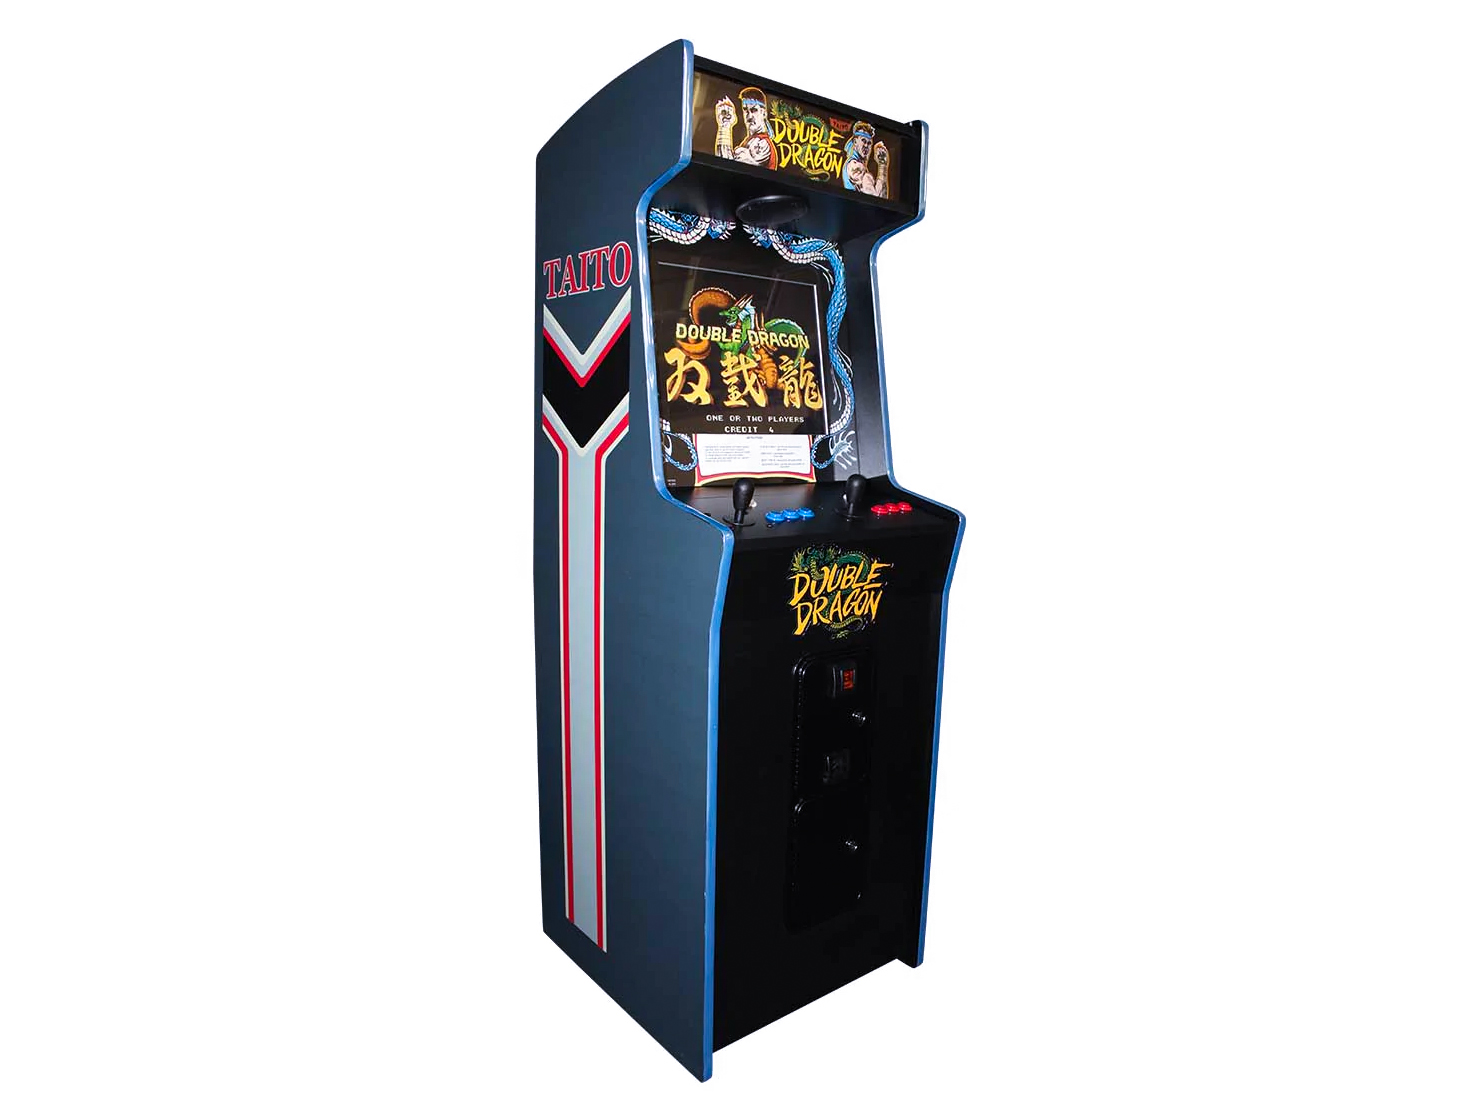 Double Dragon Arcade Game  Vintage Arcade Superstore